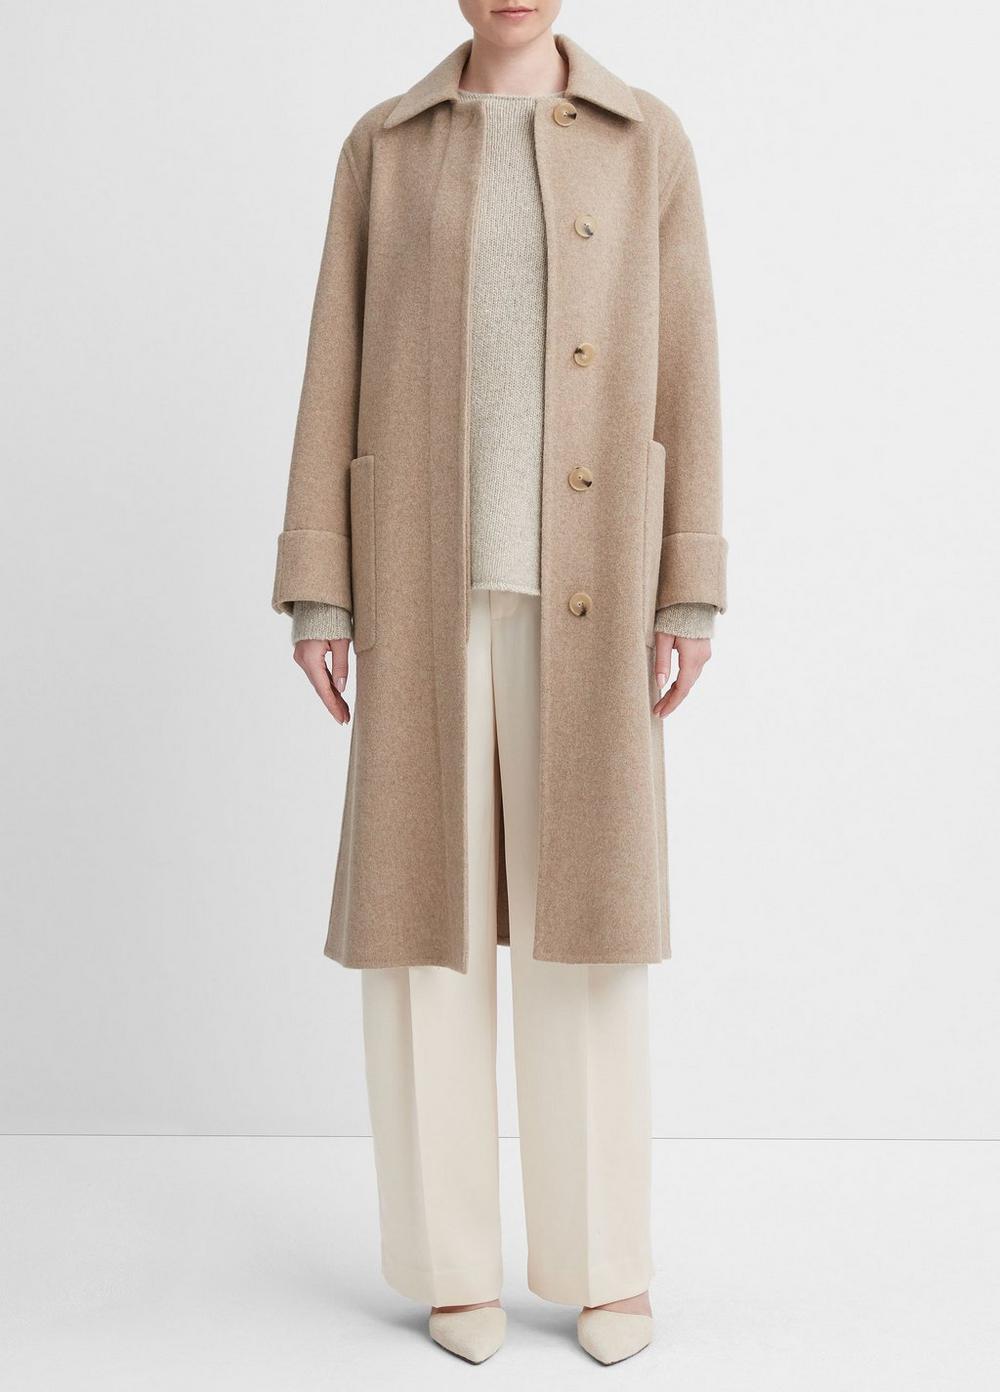 Fine Wool Overcoat, Brown, Size XL Vince